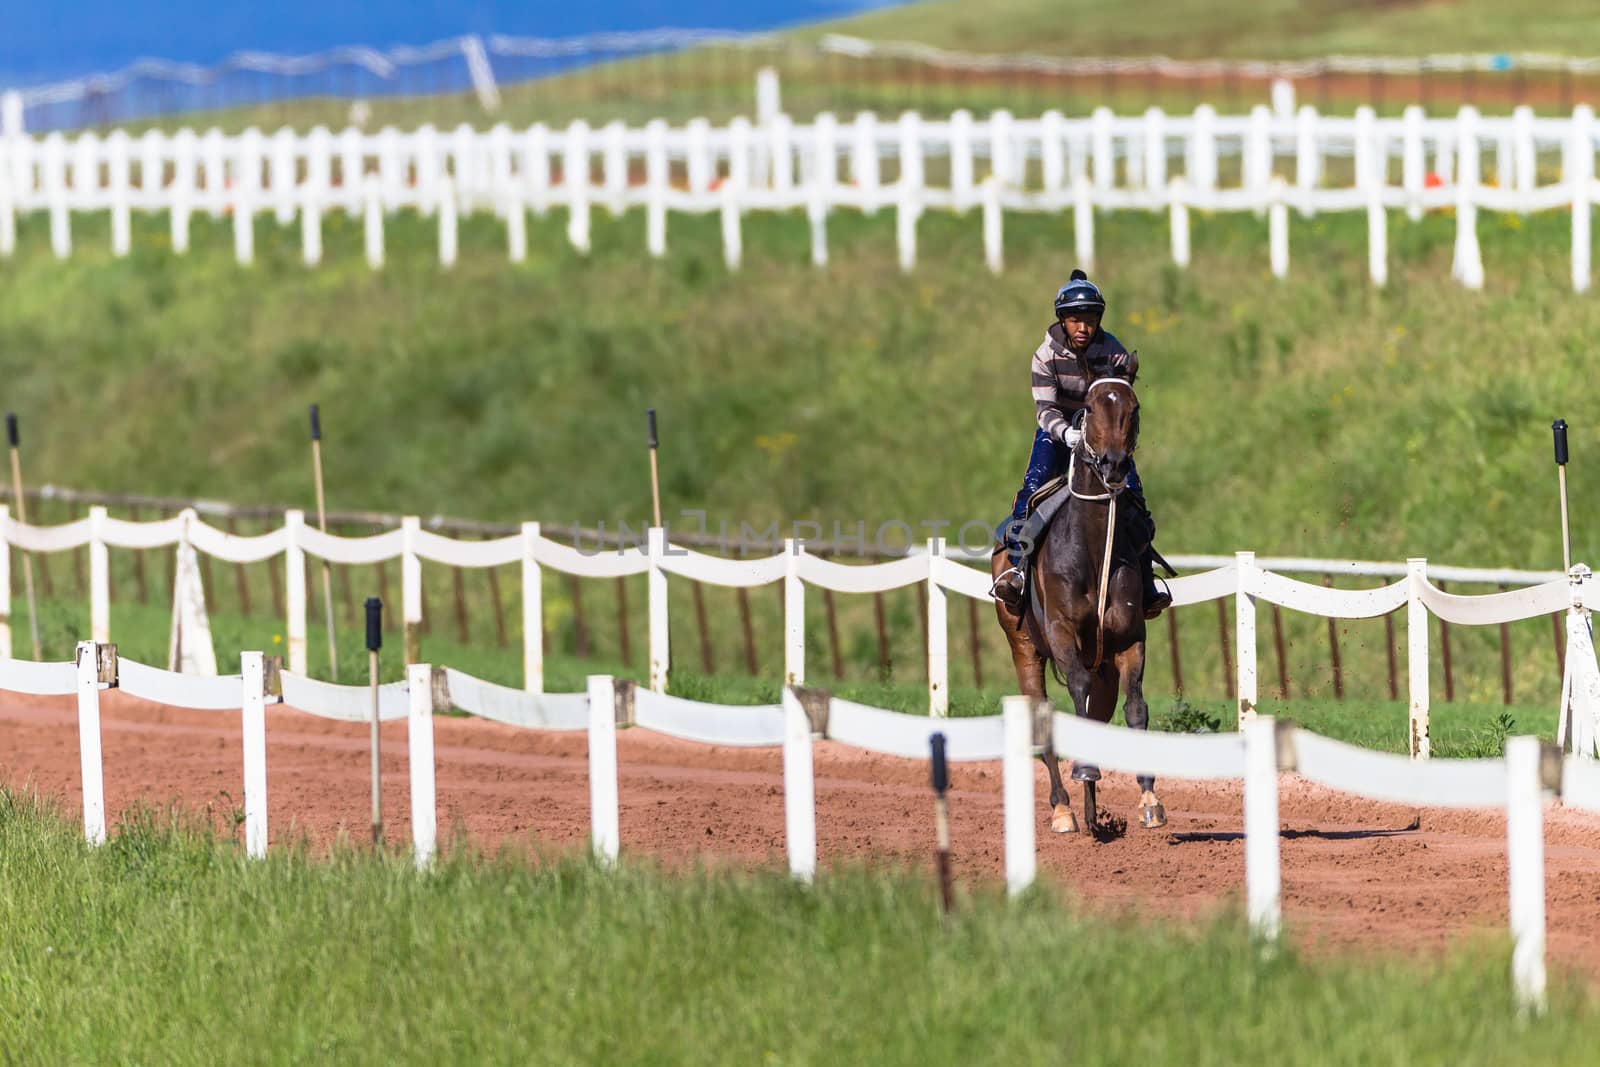 Jockey riding focusing on race horse galloping on sand track training